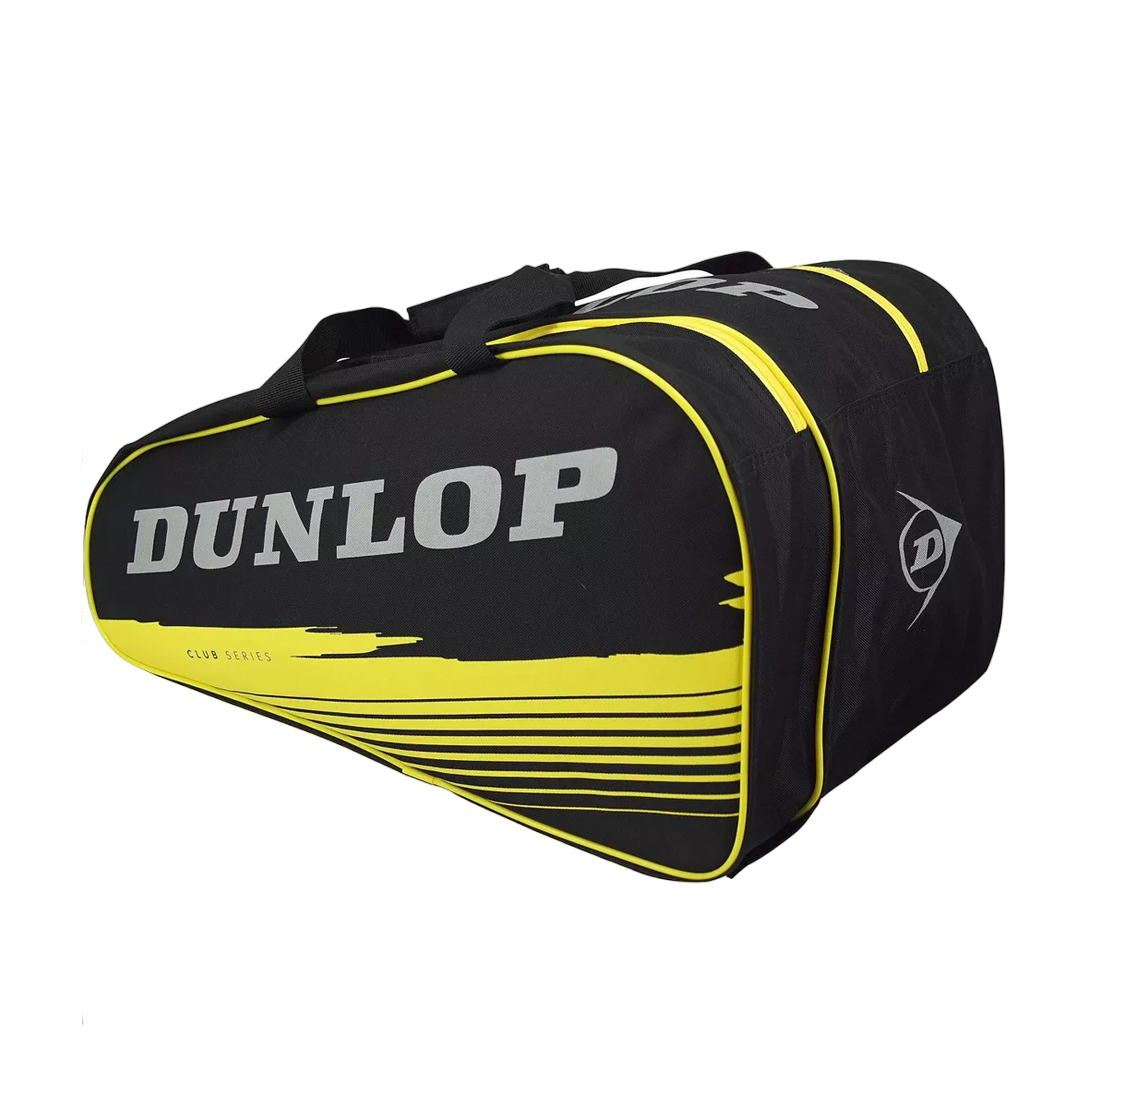 Dunlop Borsone con portaracchetta Pac Paletero Club 10325914 black-yellow